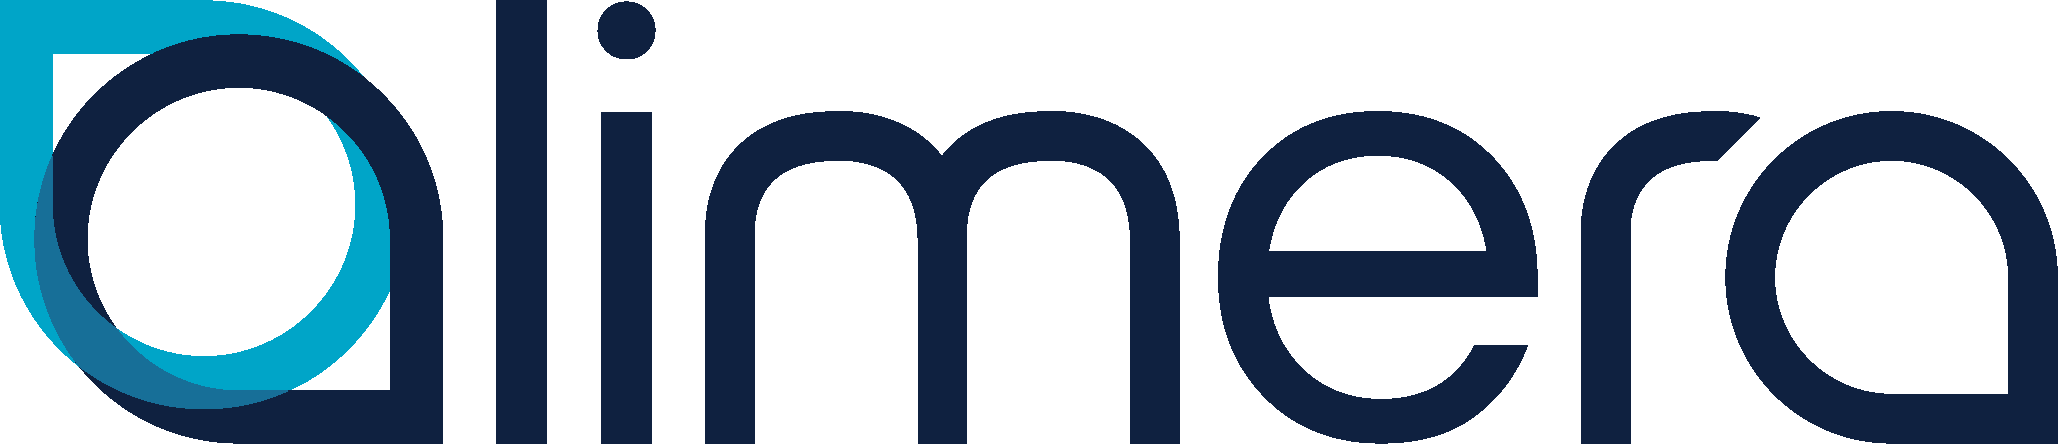 Alimera Sciences Logo auf Eyefox.com